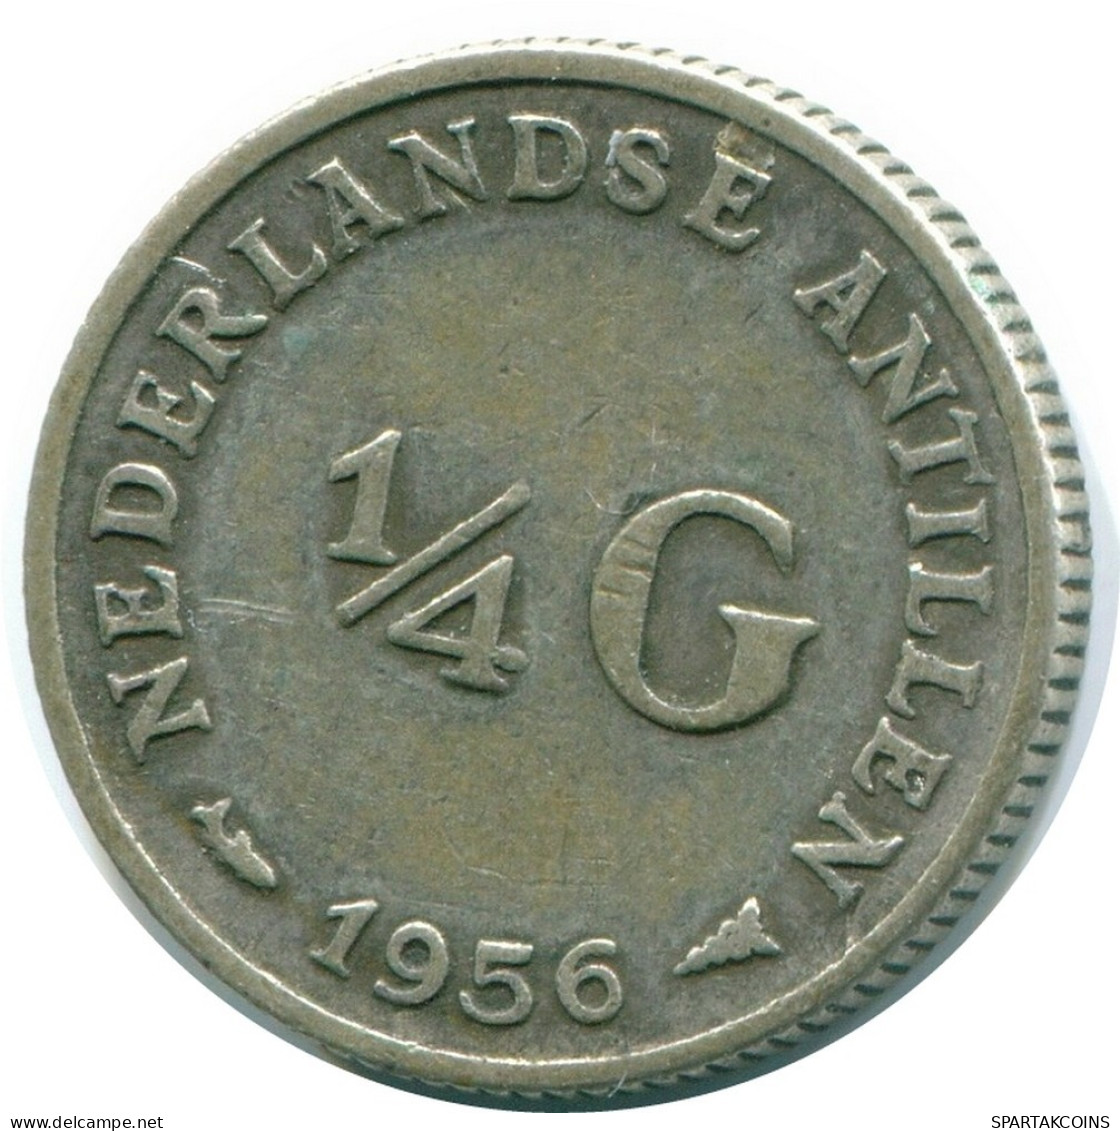 1/4 GULDEN 1956 NETHERLANDS ANTILLES SILVER Colonial Coin #NL10935.4.U.A - Antillas Neerlandesas